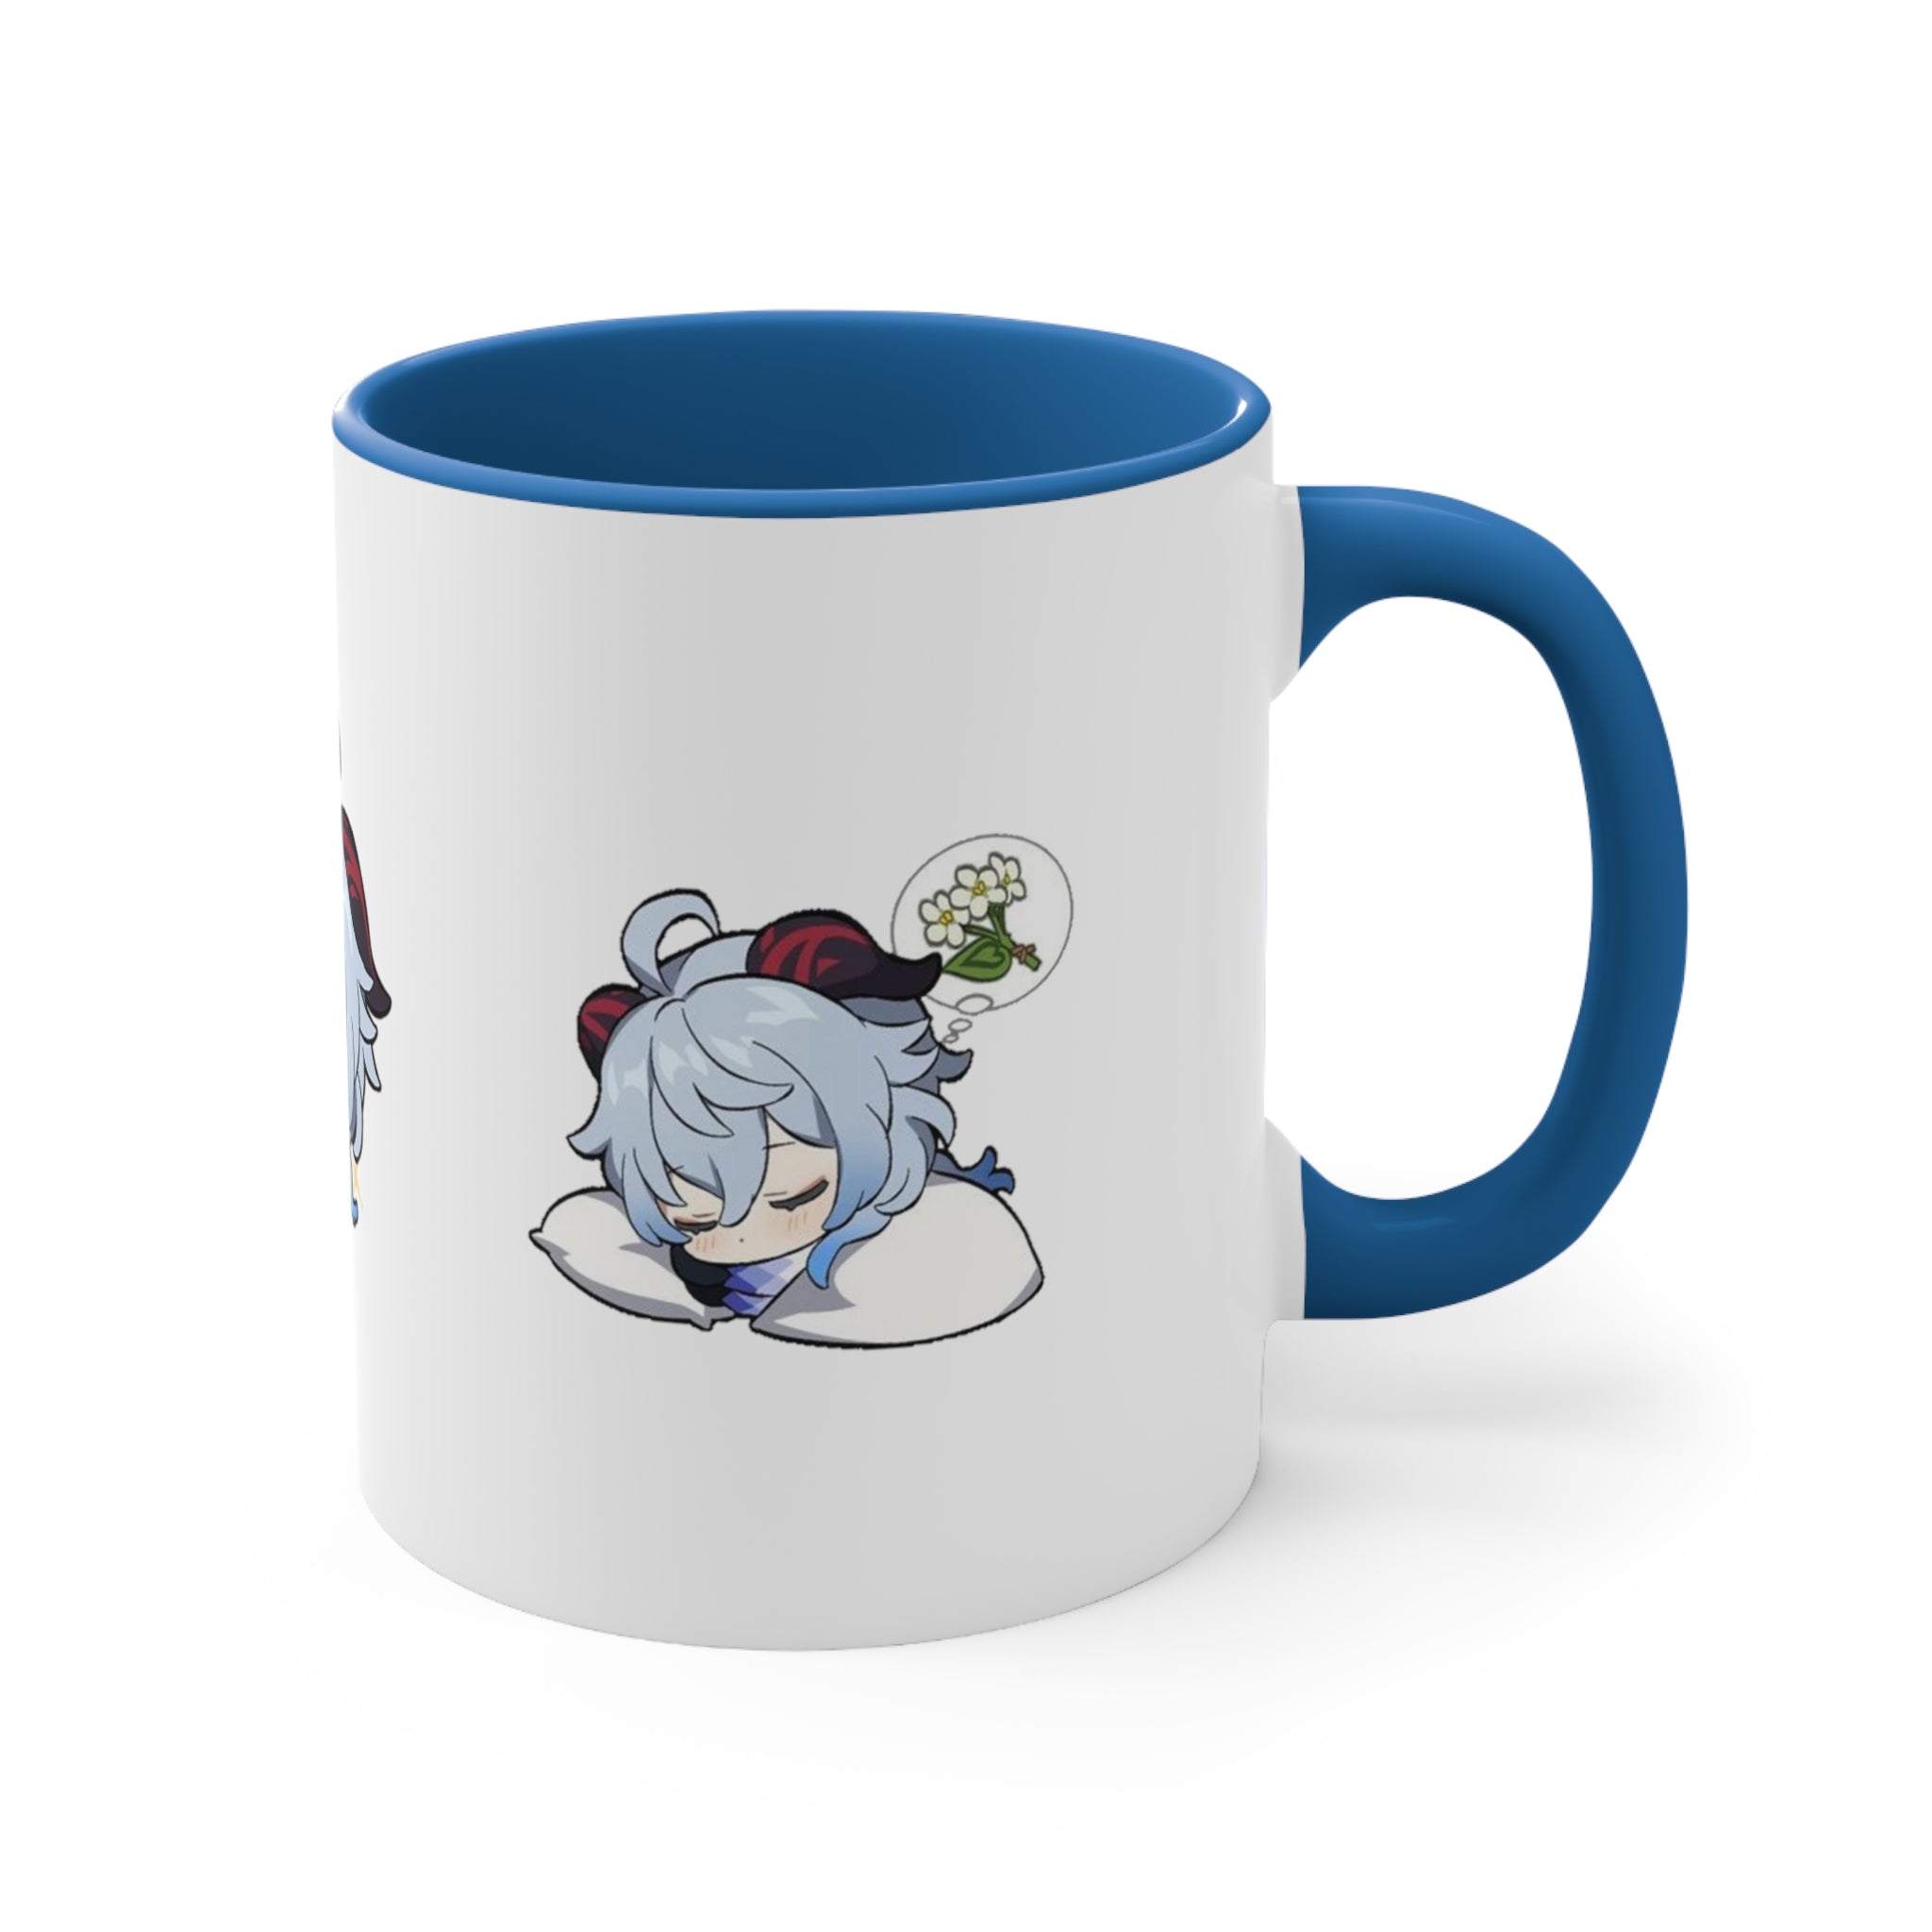 Ganyu Genshin Impact Accent Coffee Mug, 11oz Cups Mugs Cup Gift For Gamer Gifts Game Anime Fanart Fan Birthday Valentine's Christmas